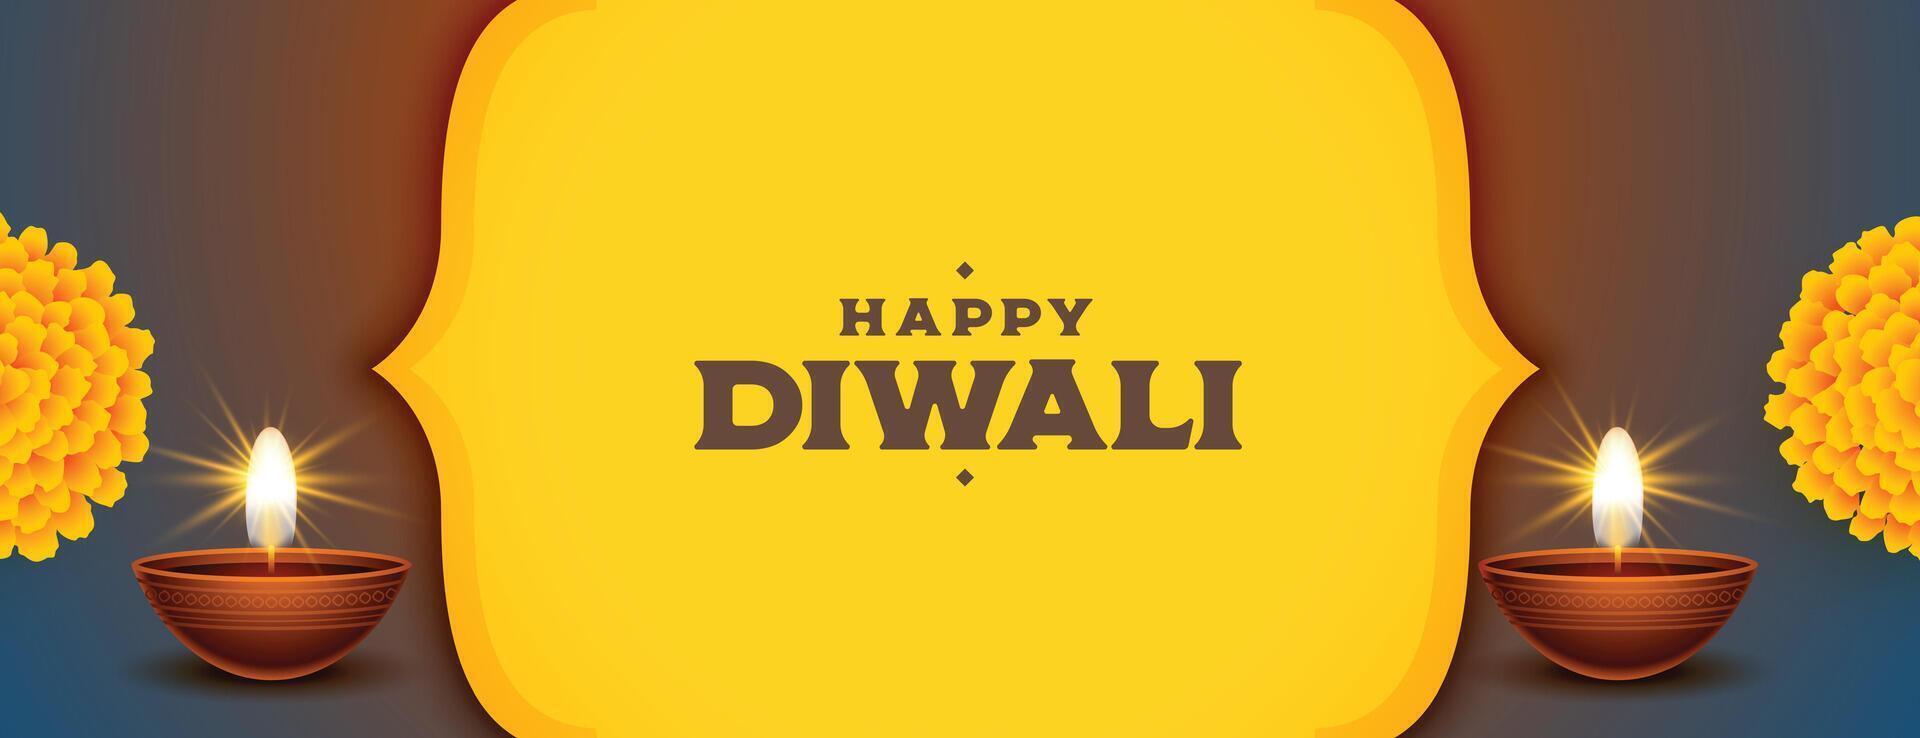 happy diwali holiday banner with shiny diya and floral design vector